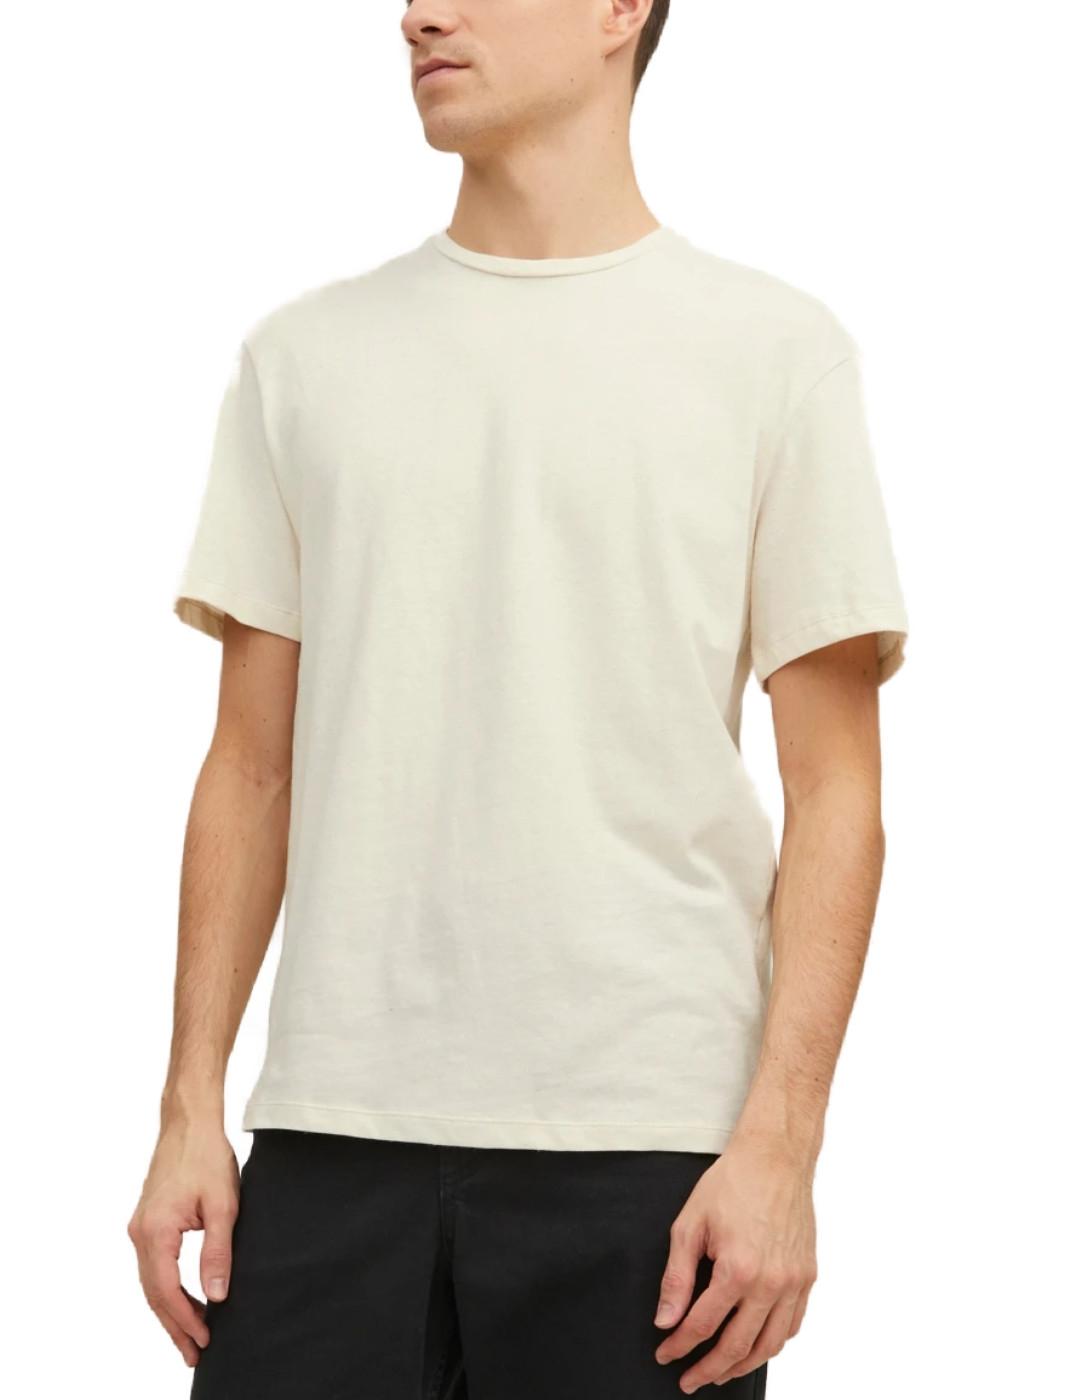 Camiseta Jack&Jones Soft blanco roto manga corta para hombre